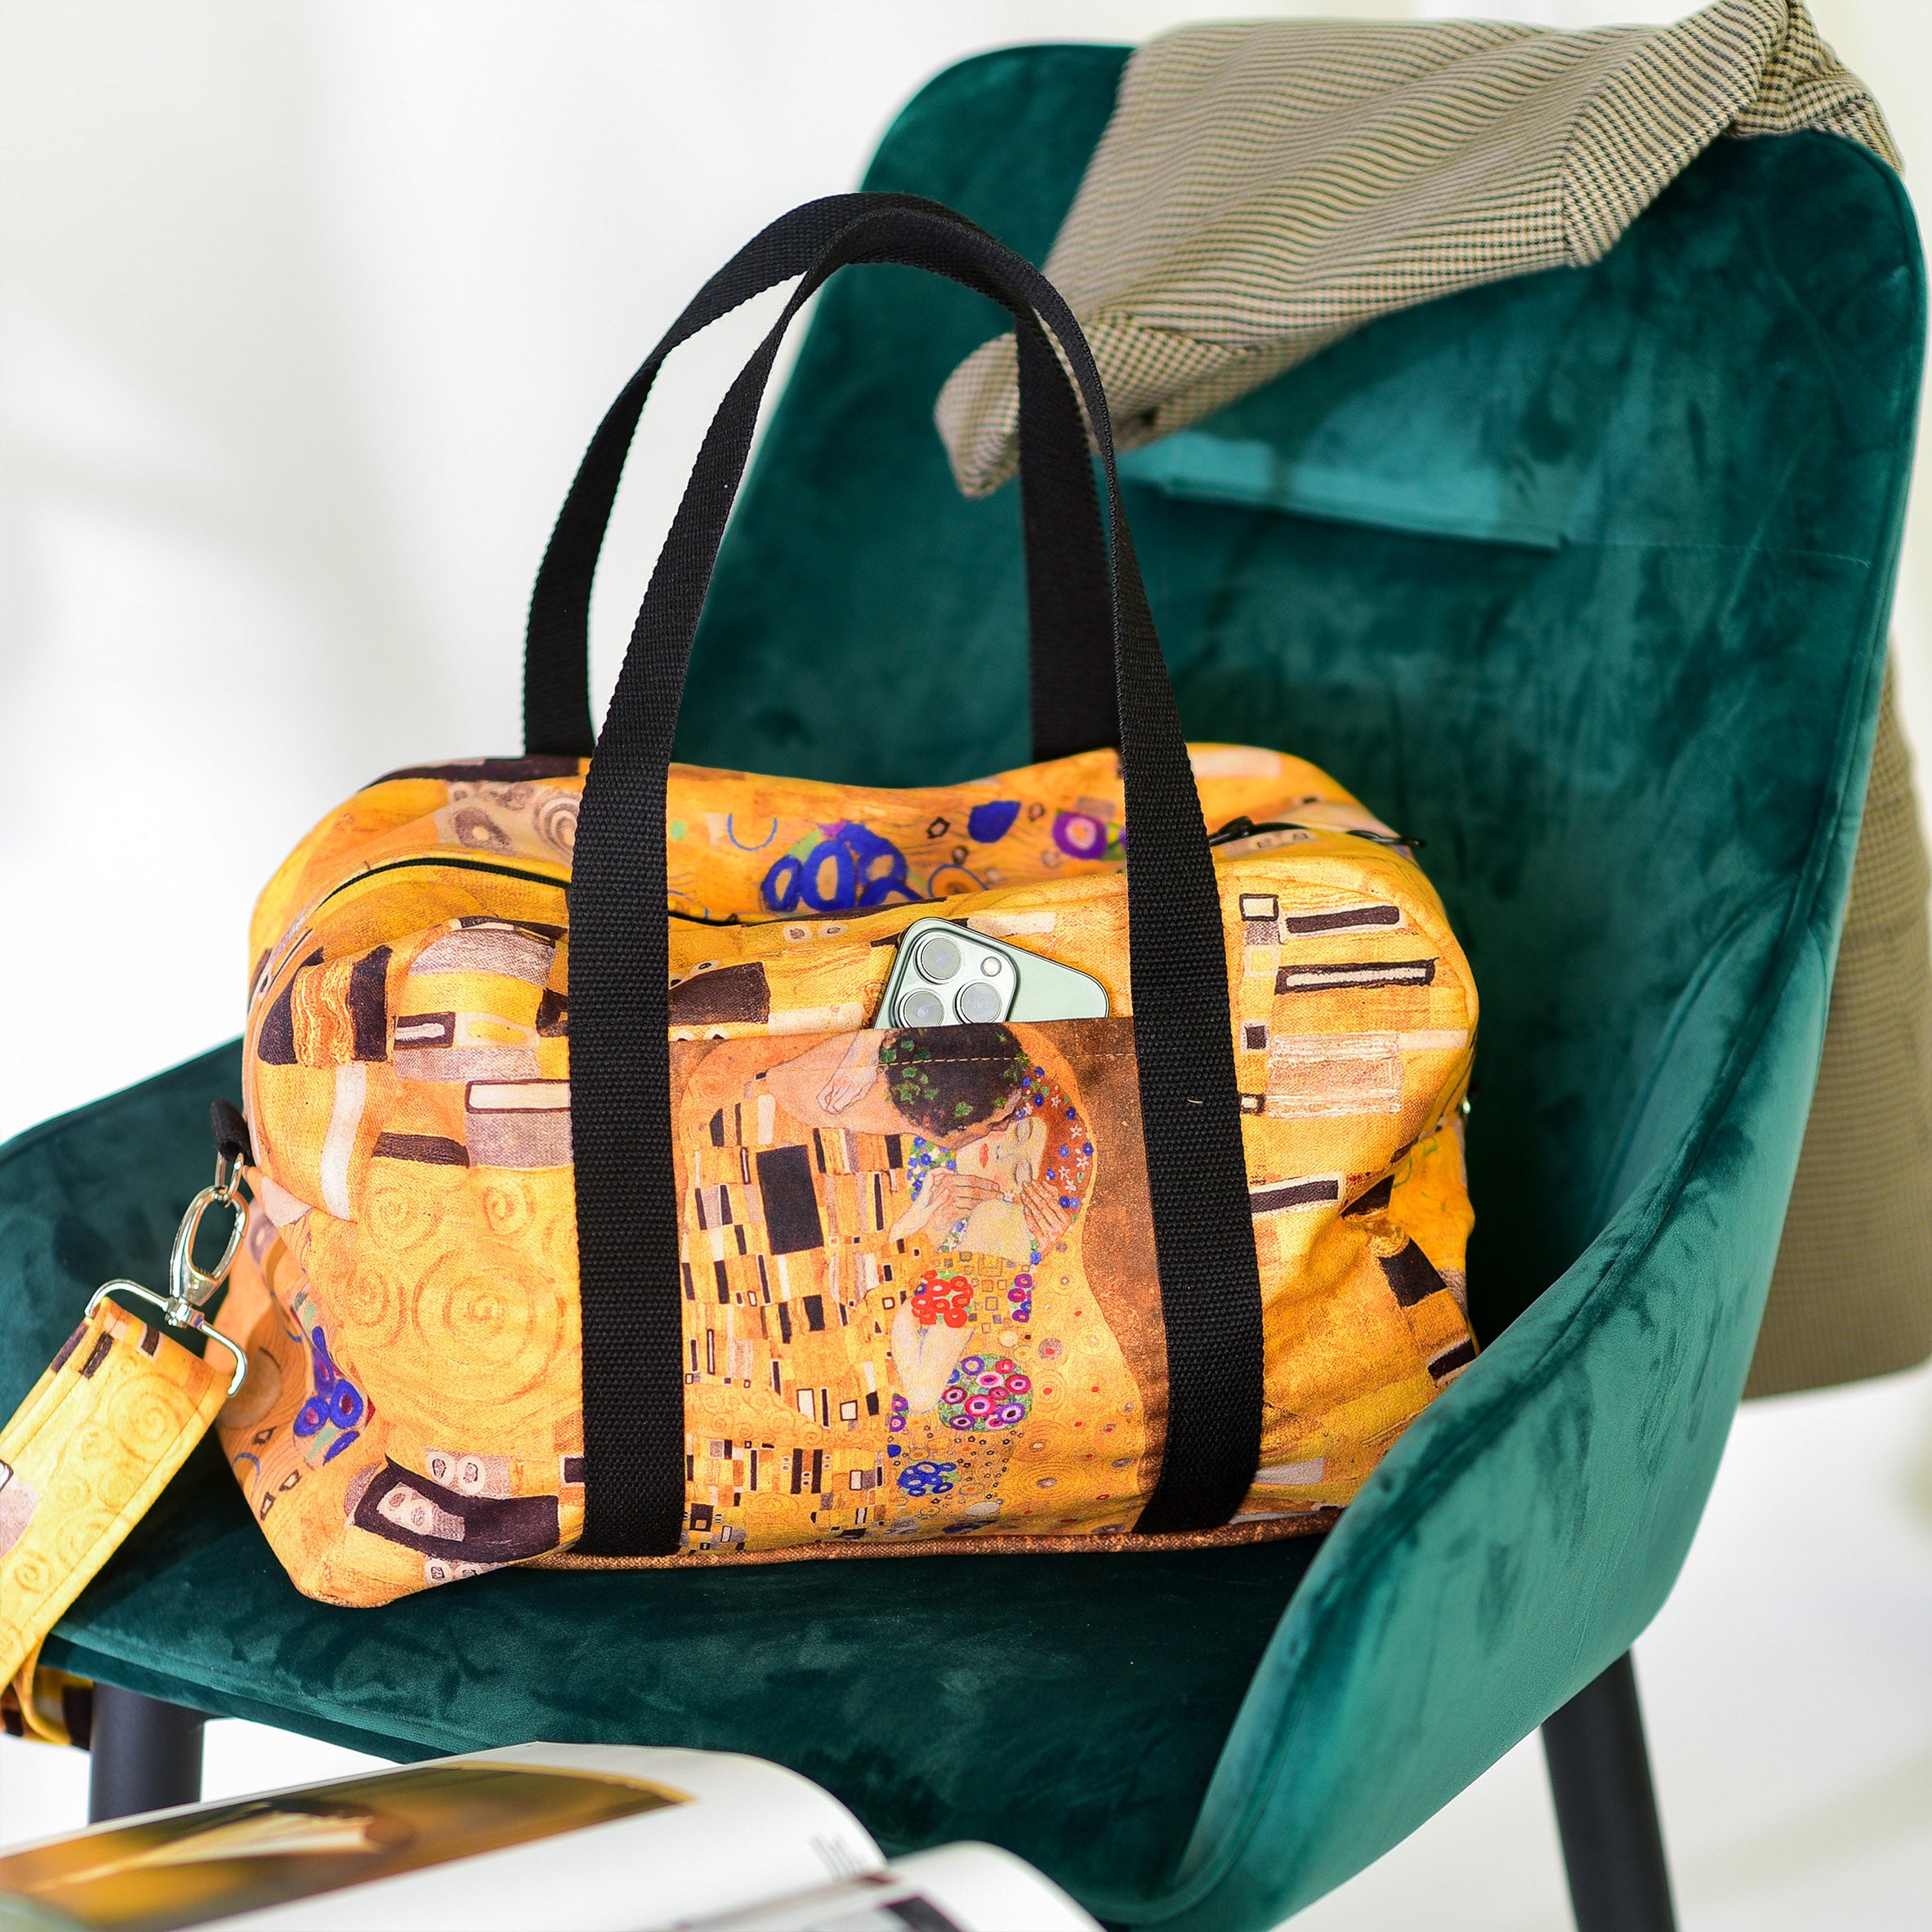 Travel / sports bag Gustav Klimt "The Kiss"